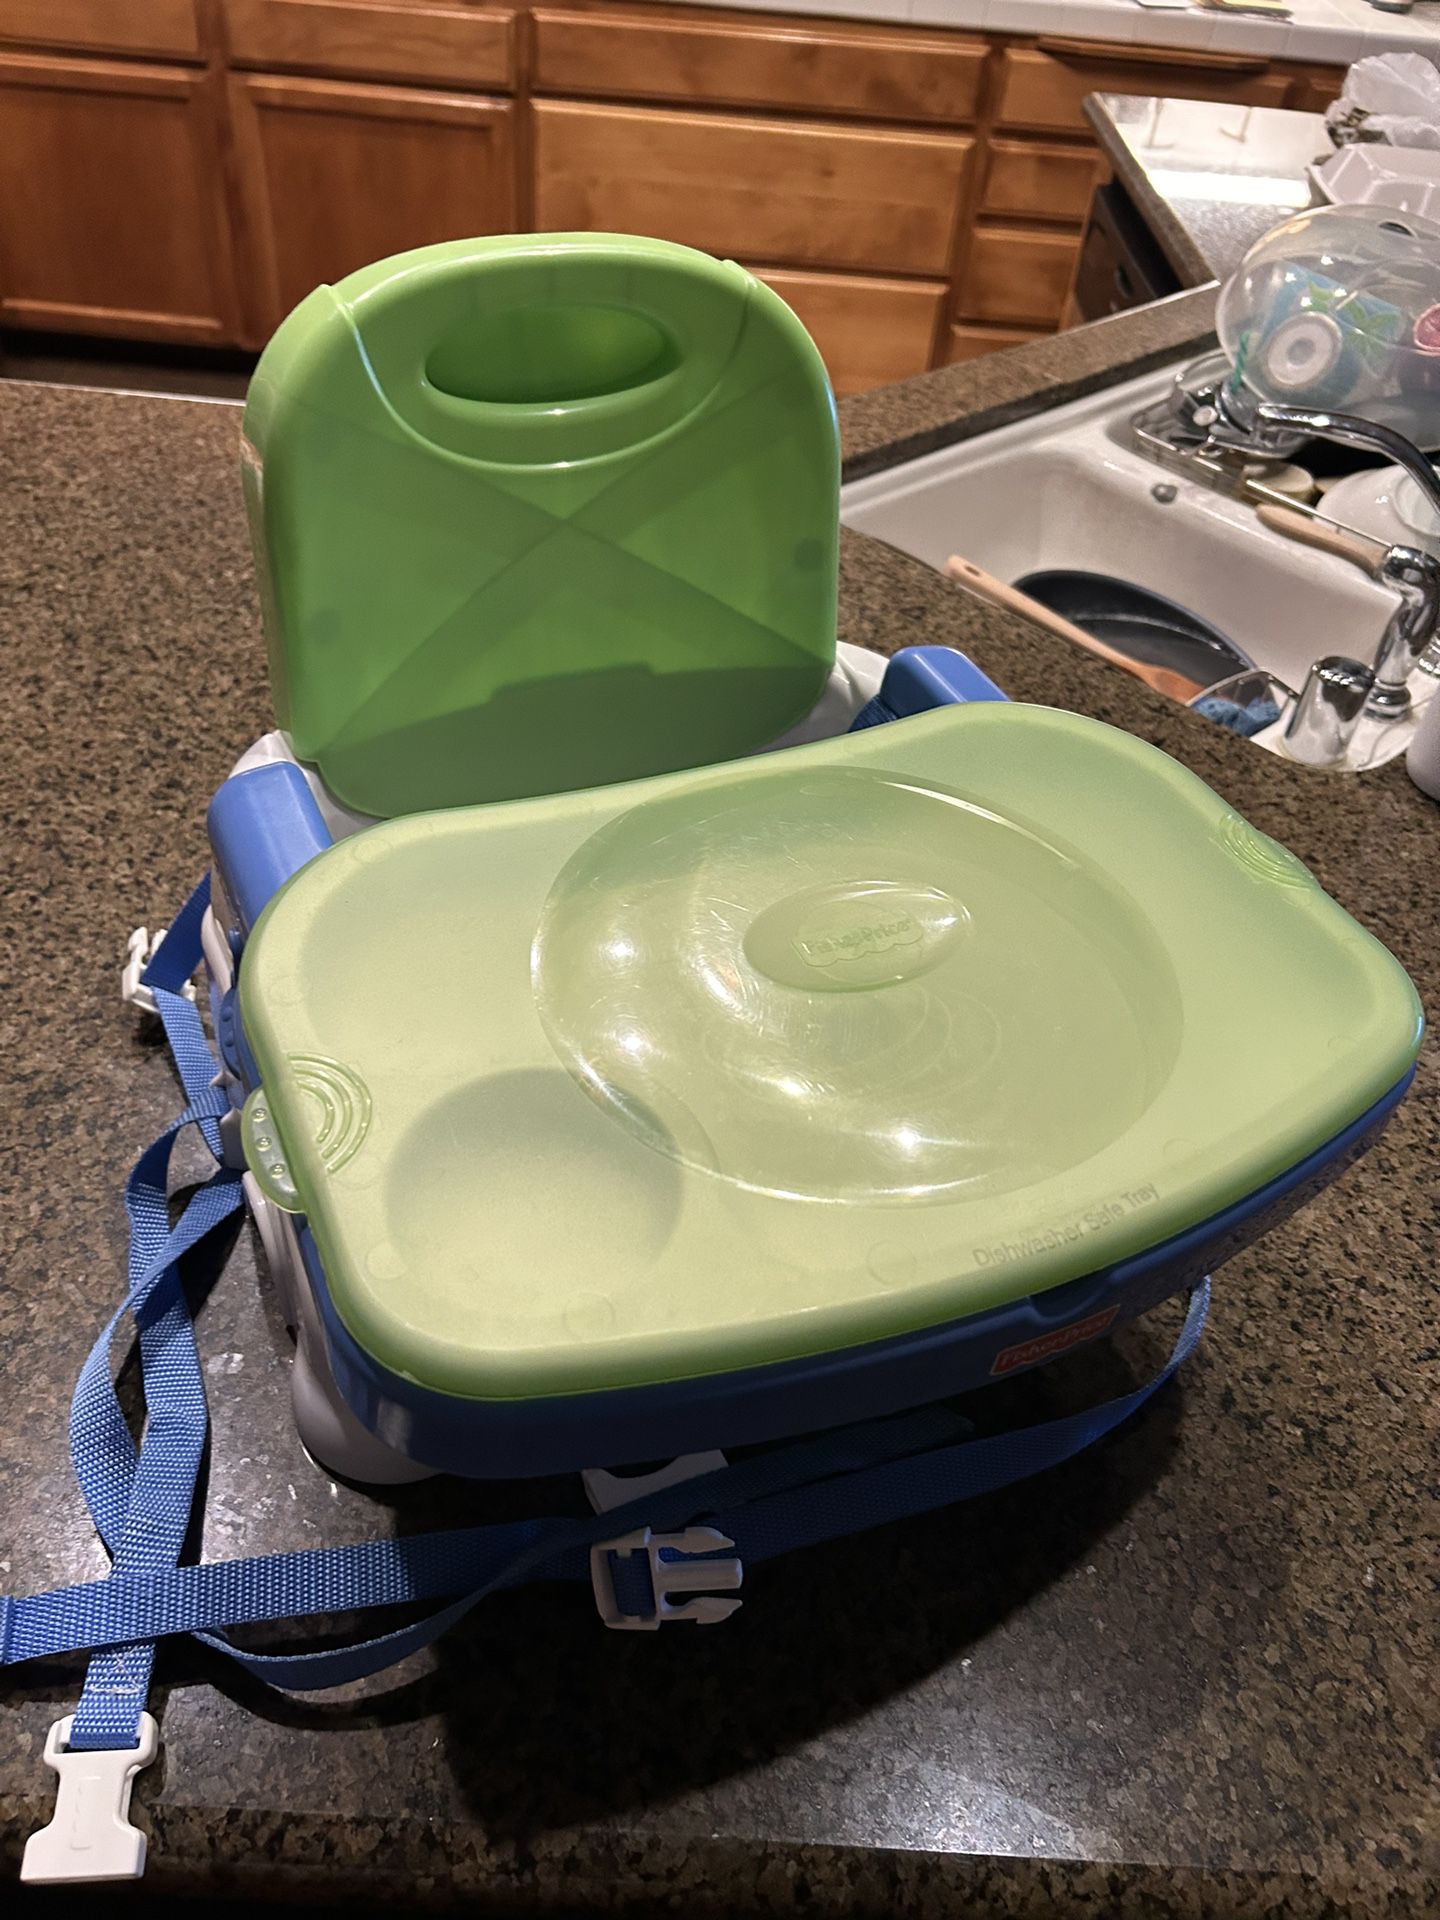 Fischer Price Toddler Portable Booster Seat